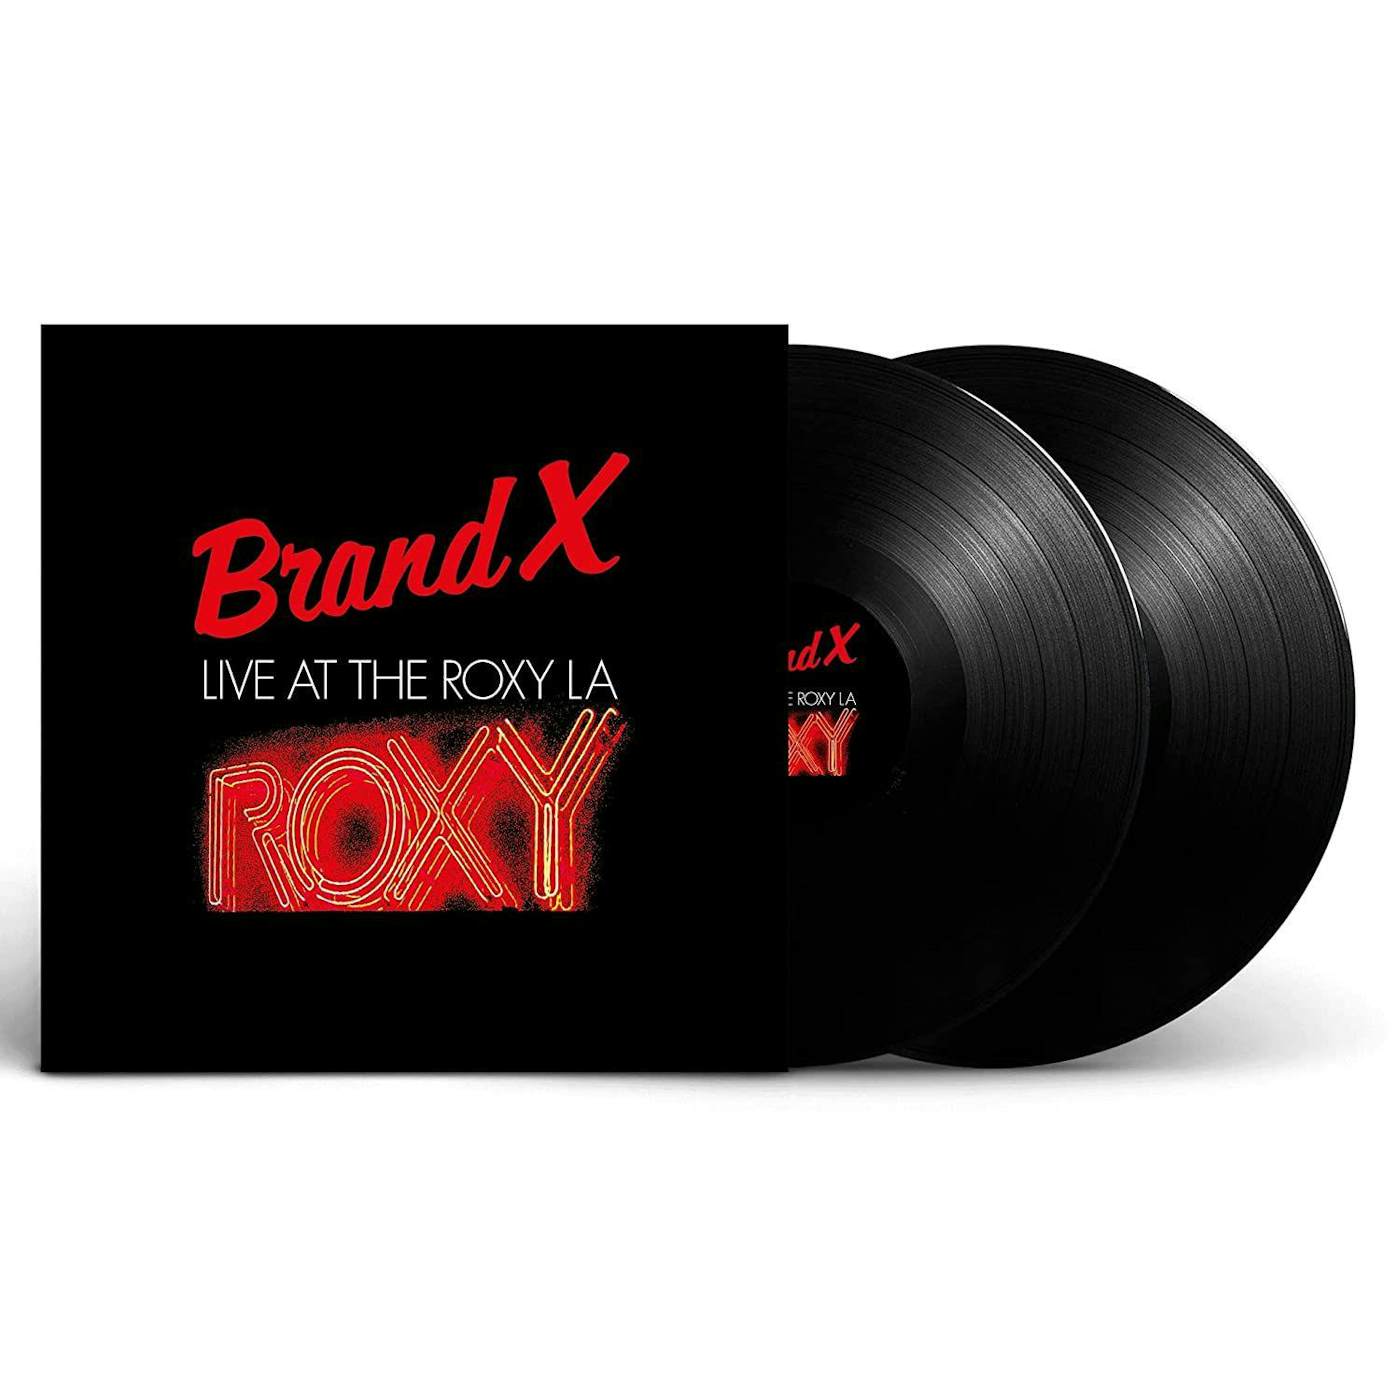 Brand X Live At The Roxy L.A. 1979 (2lp) Vinyl Record